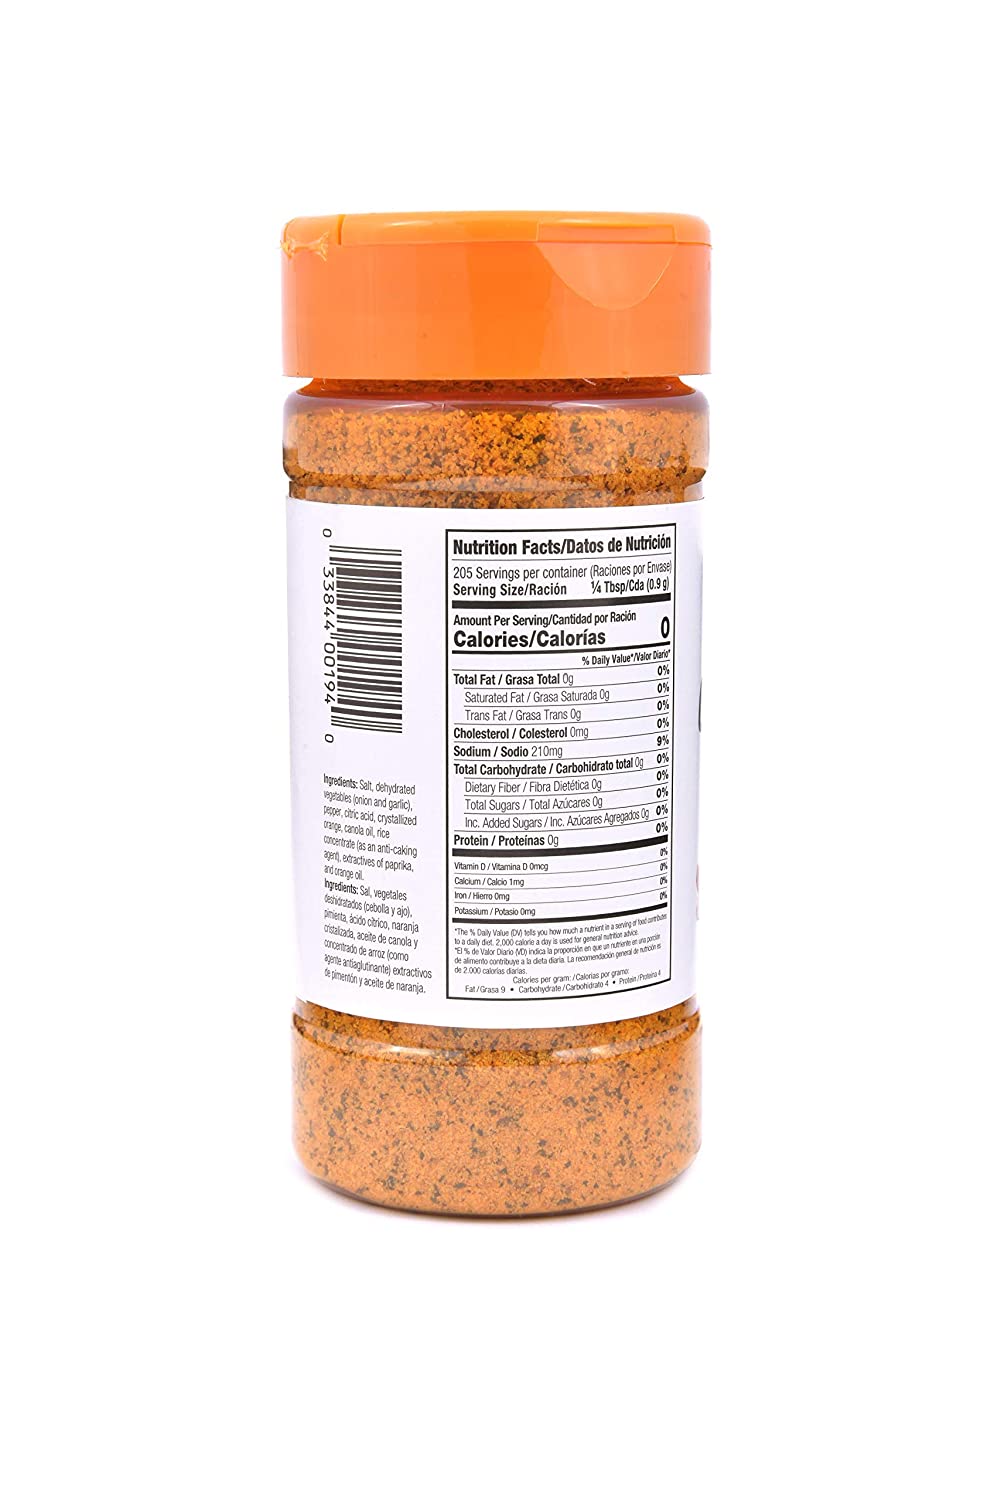 Orange Pepper Seasoning Recipe